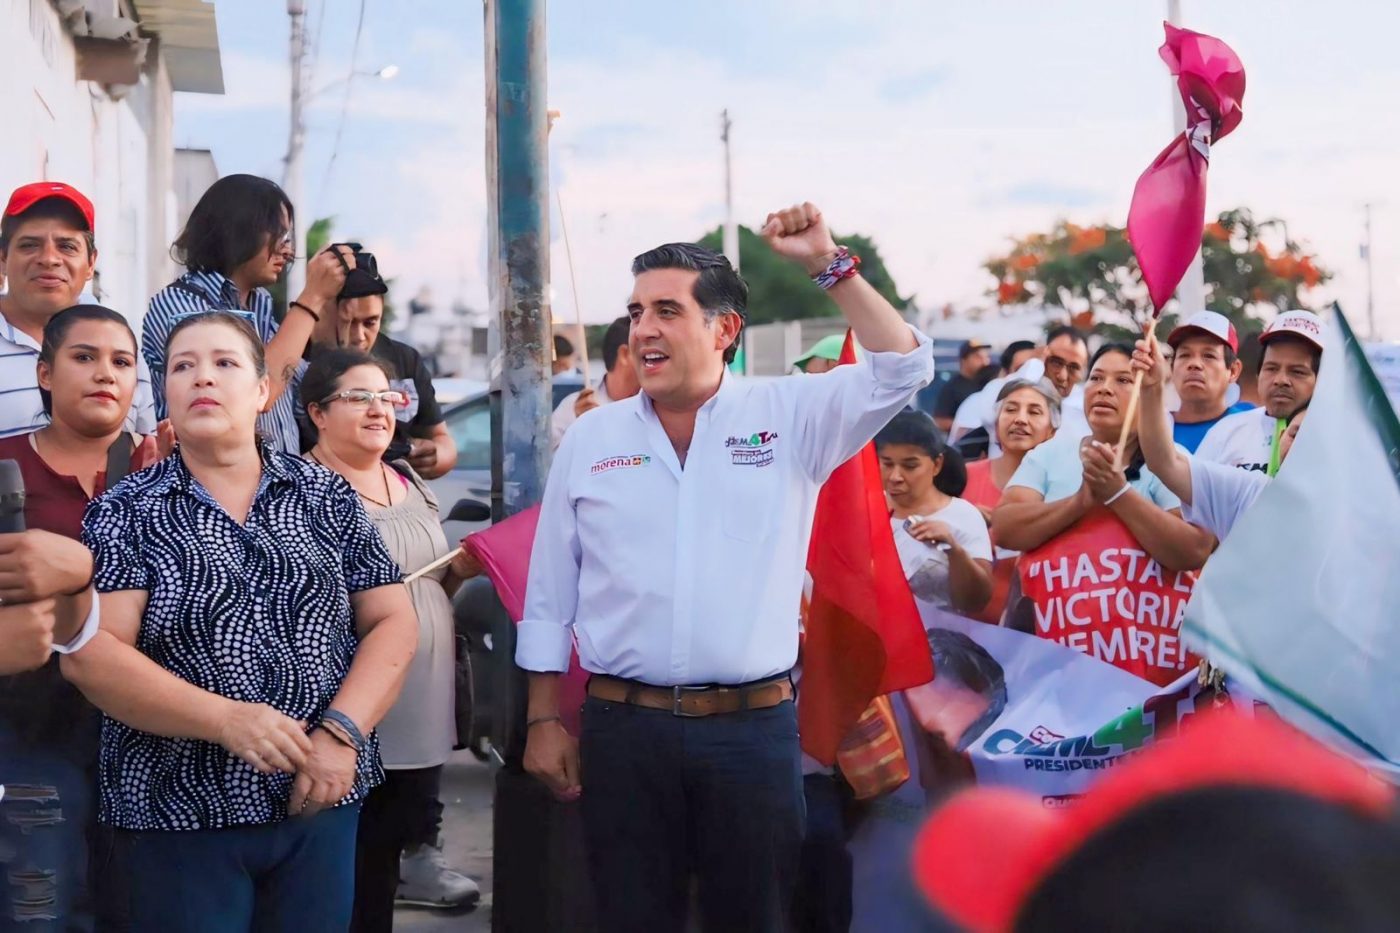 "Felifer" Macías candidato por la alcaldía de Querétaro